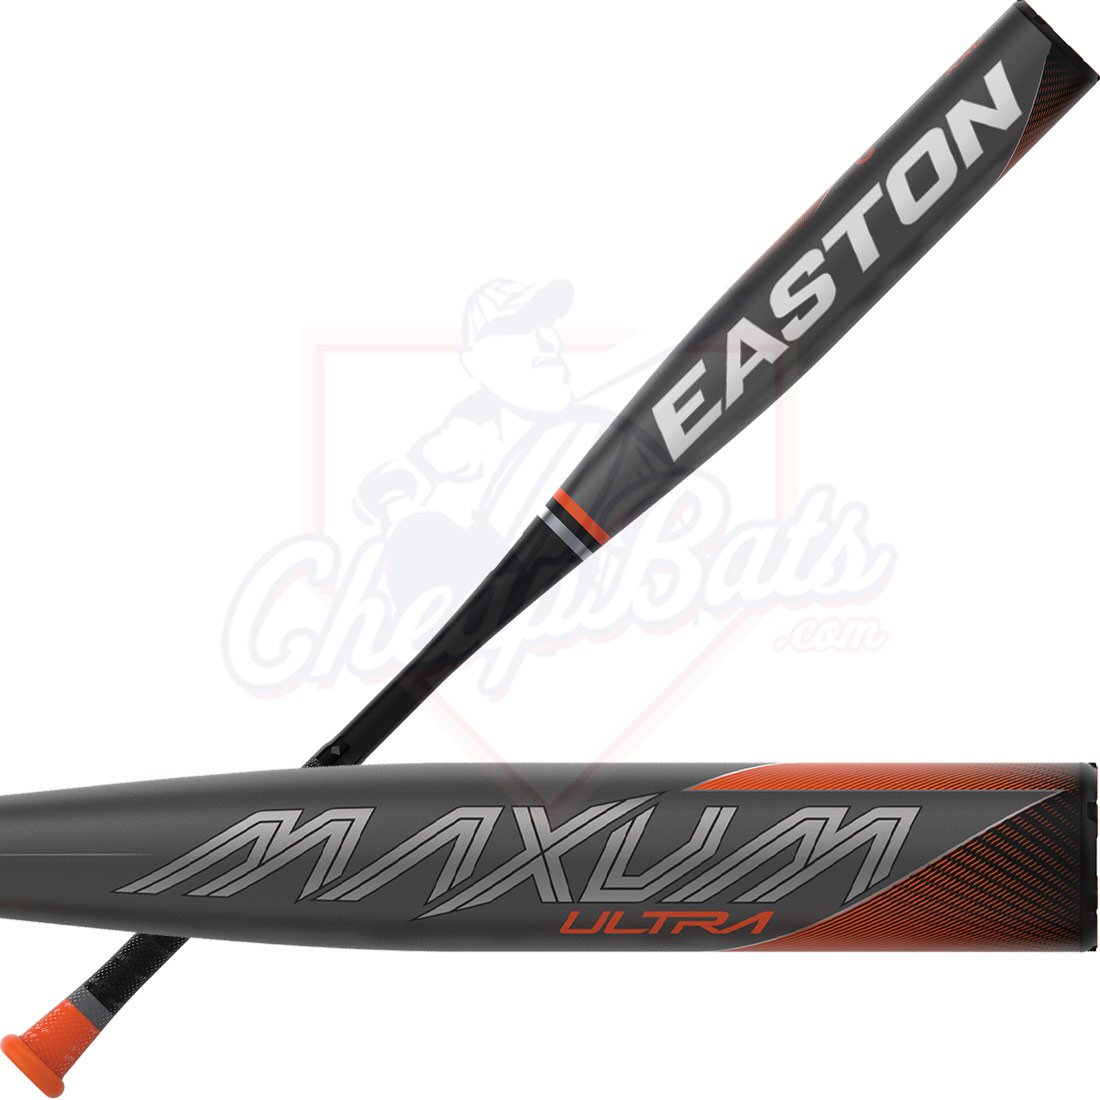 2021 Easton Maxum Ultra BBCOR Baseball Bat -3oz BB21MX